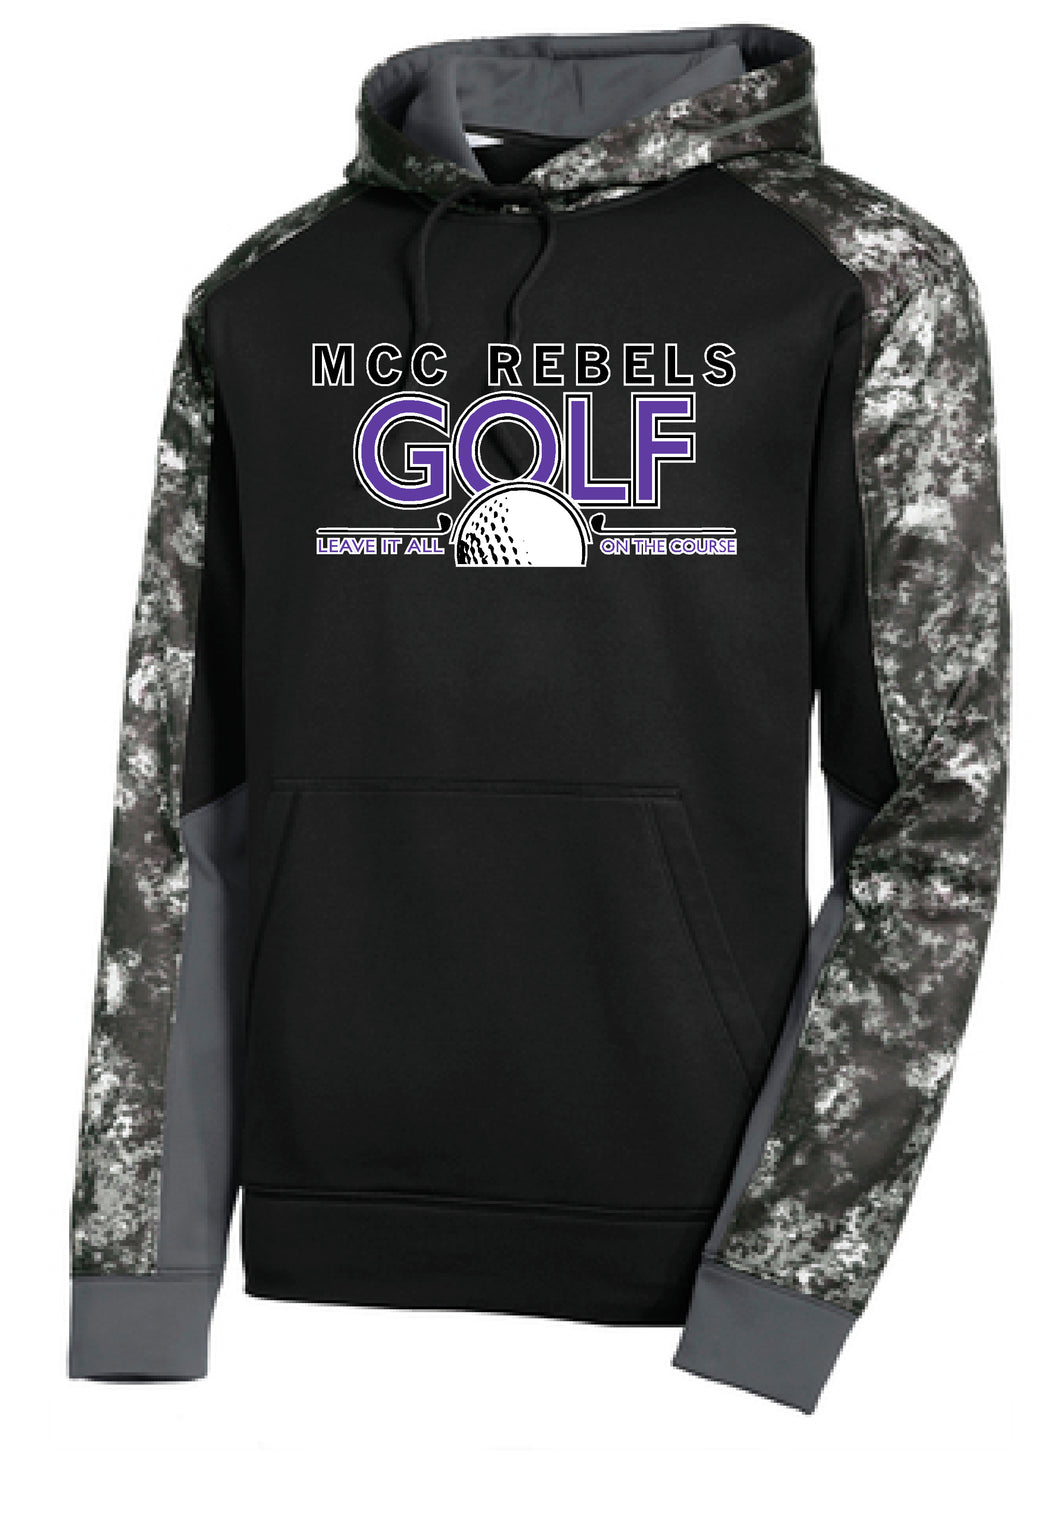 MCC Rebels Golf SportTek Mineral Sweatshirt - BLACK